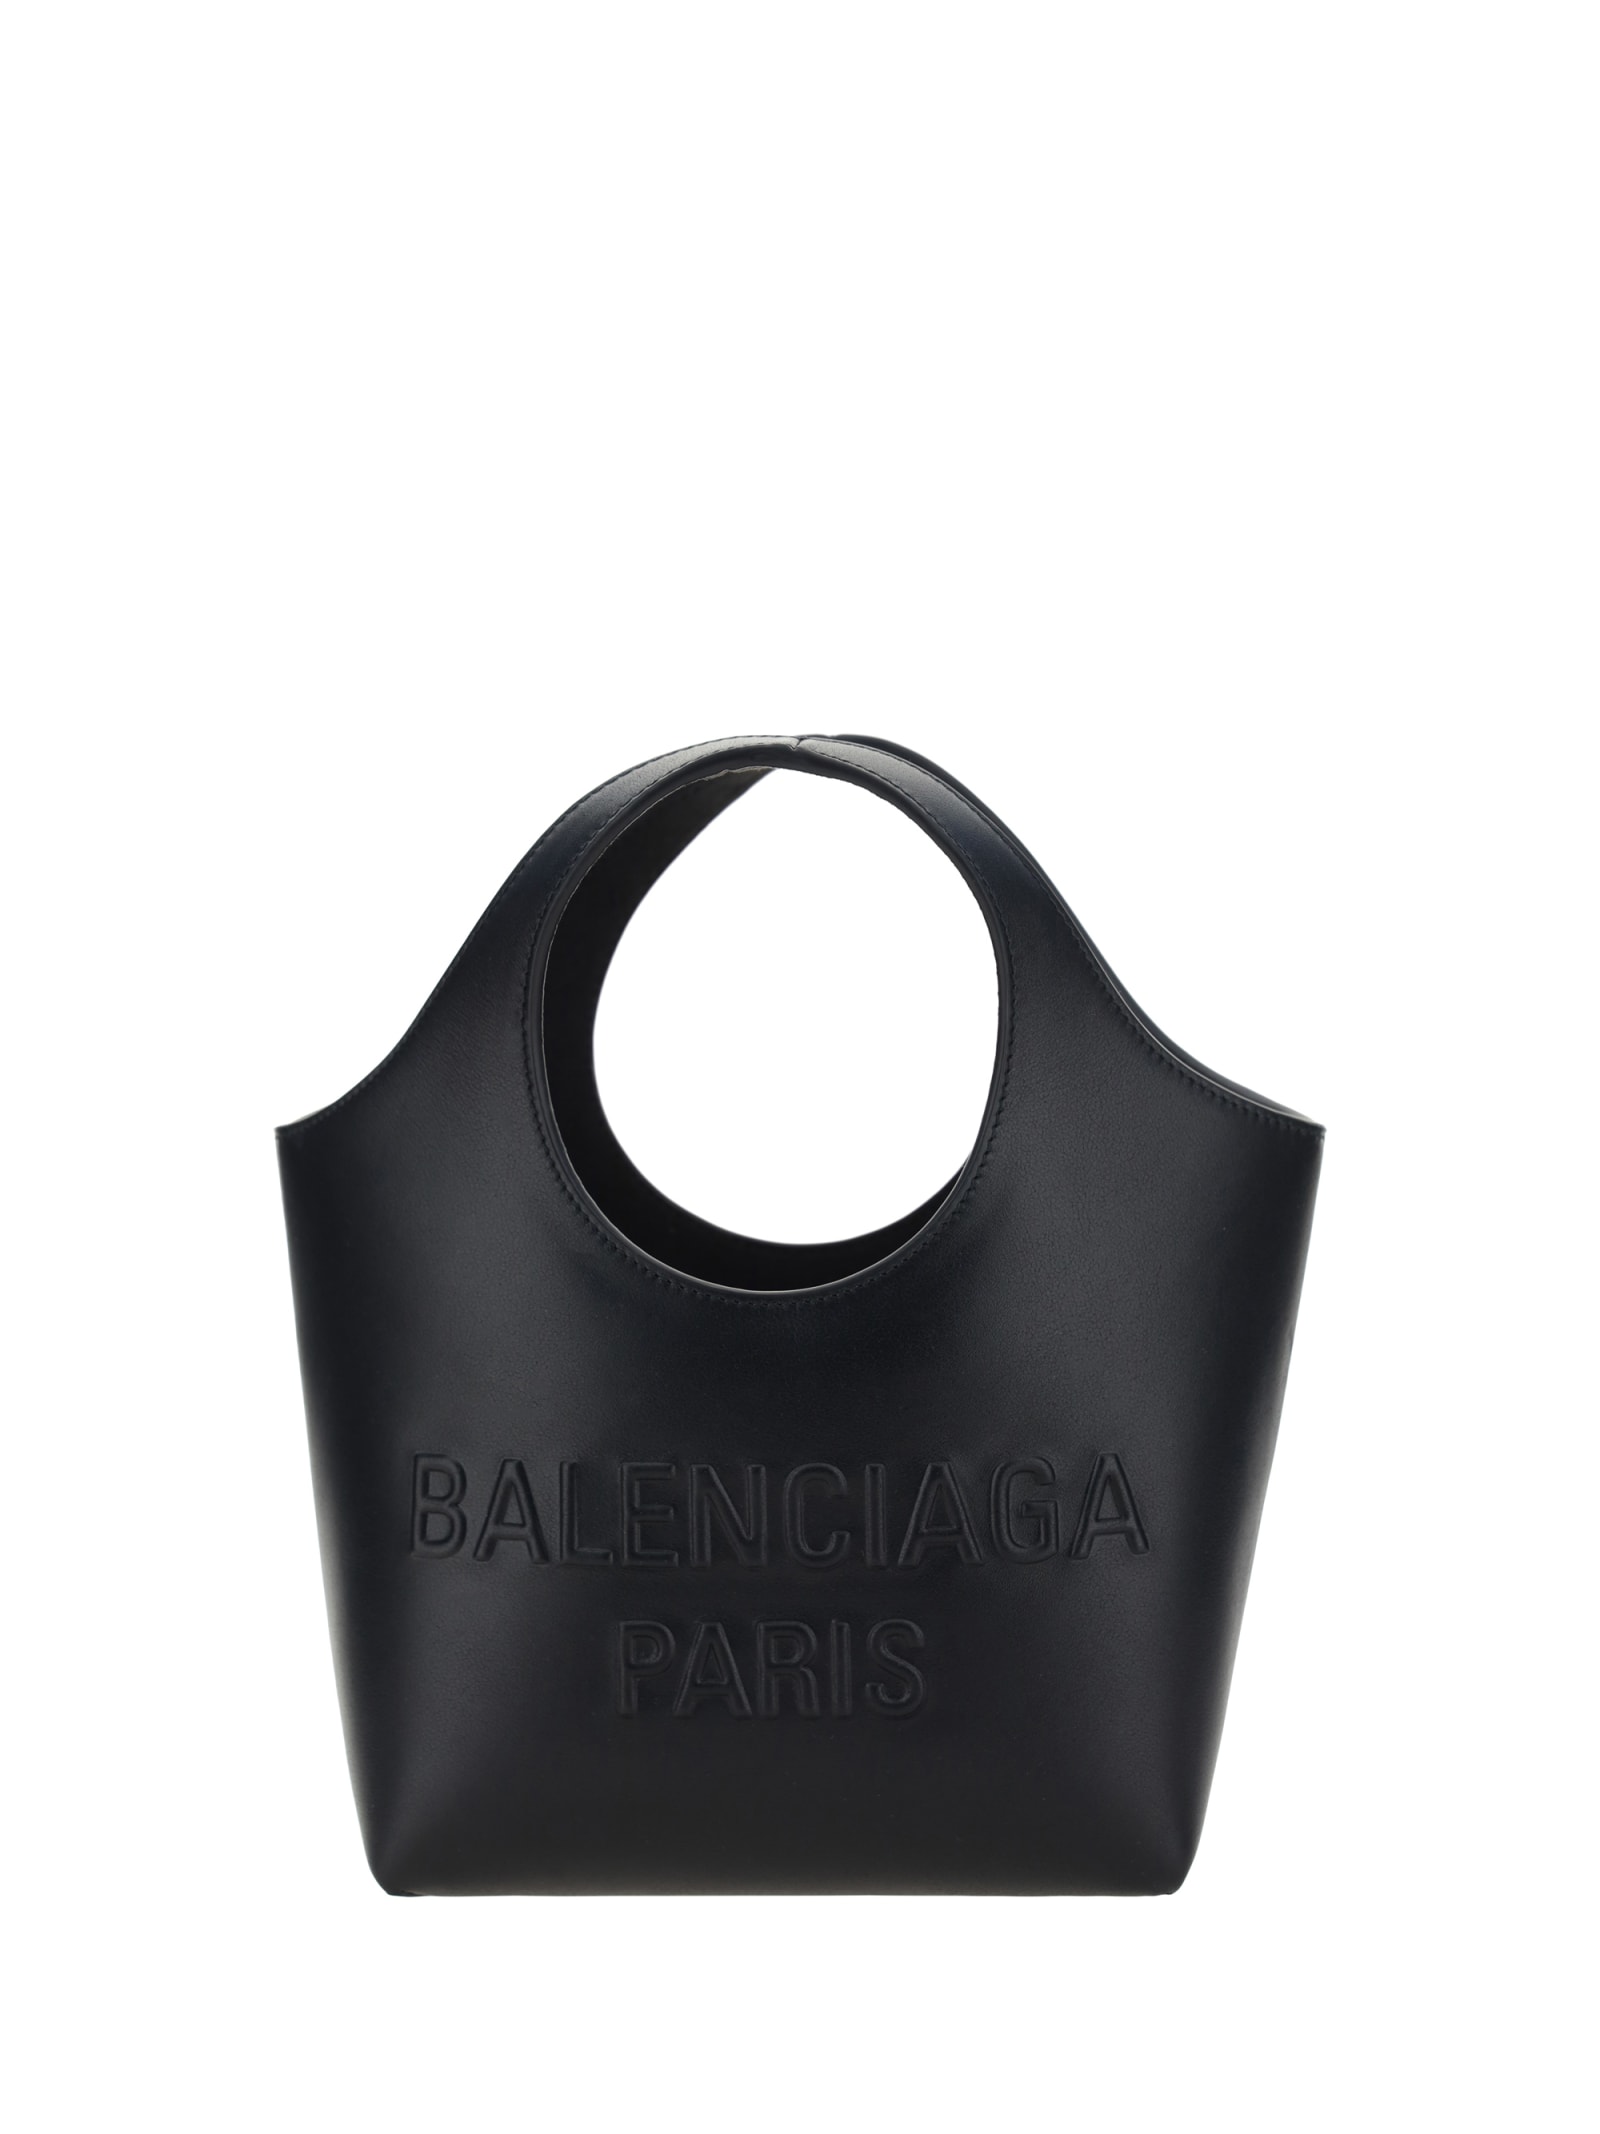 Balenciaga Tote Mary-kate Handbag In Black